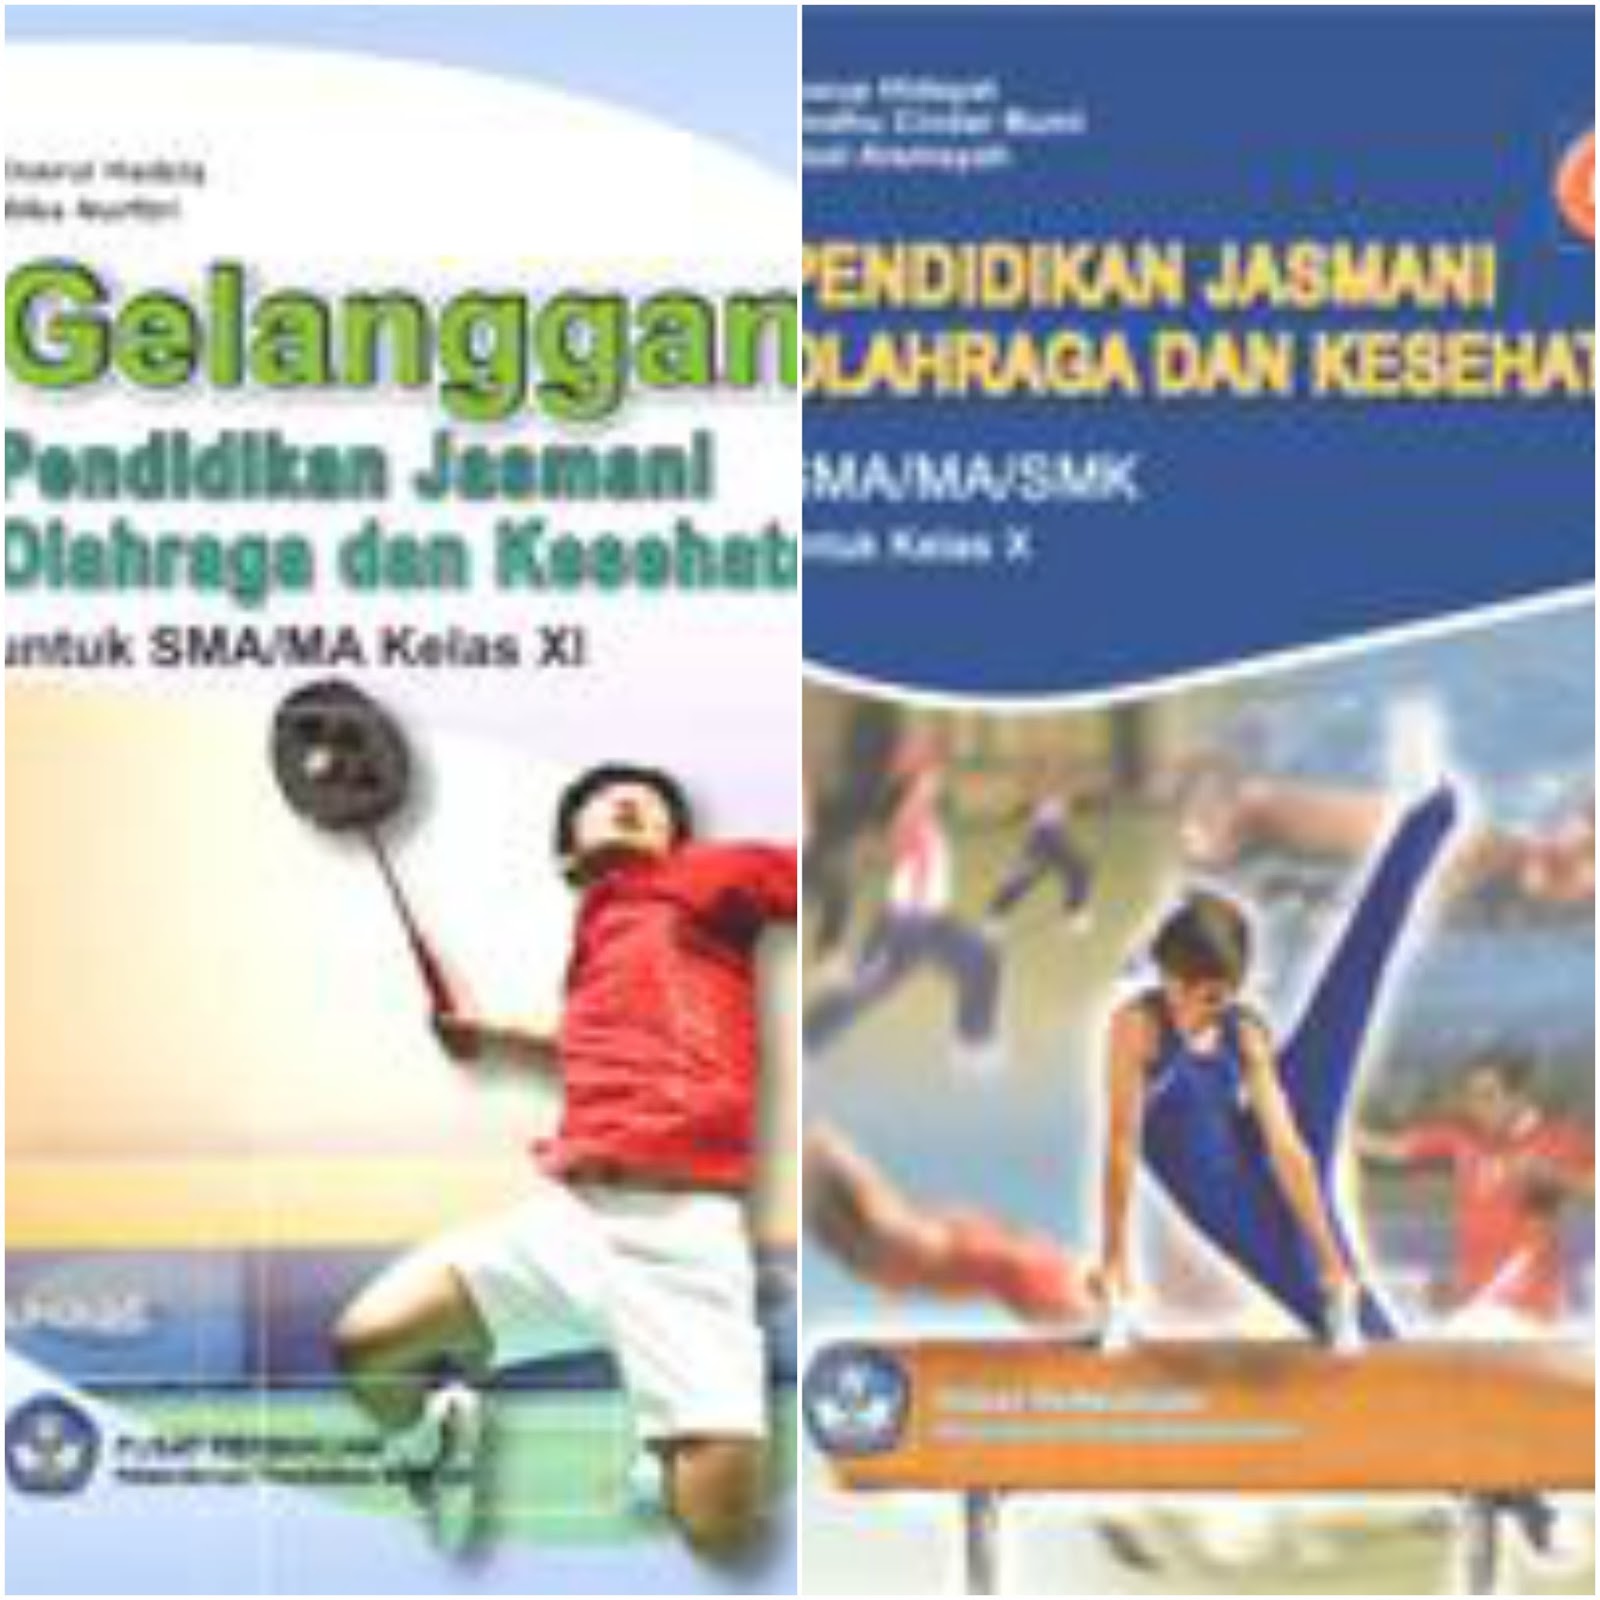 Kumpulan Buku Pelajaran Pendidikan Jasmani Olahraga dan Kesehatan Untuk SMA SMK dan MAKyang dishare ini adalah Kurikulum KTSP Silakan rekan rekan guru dan